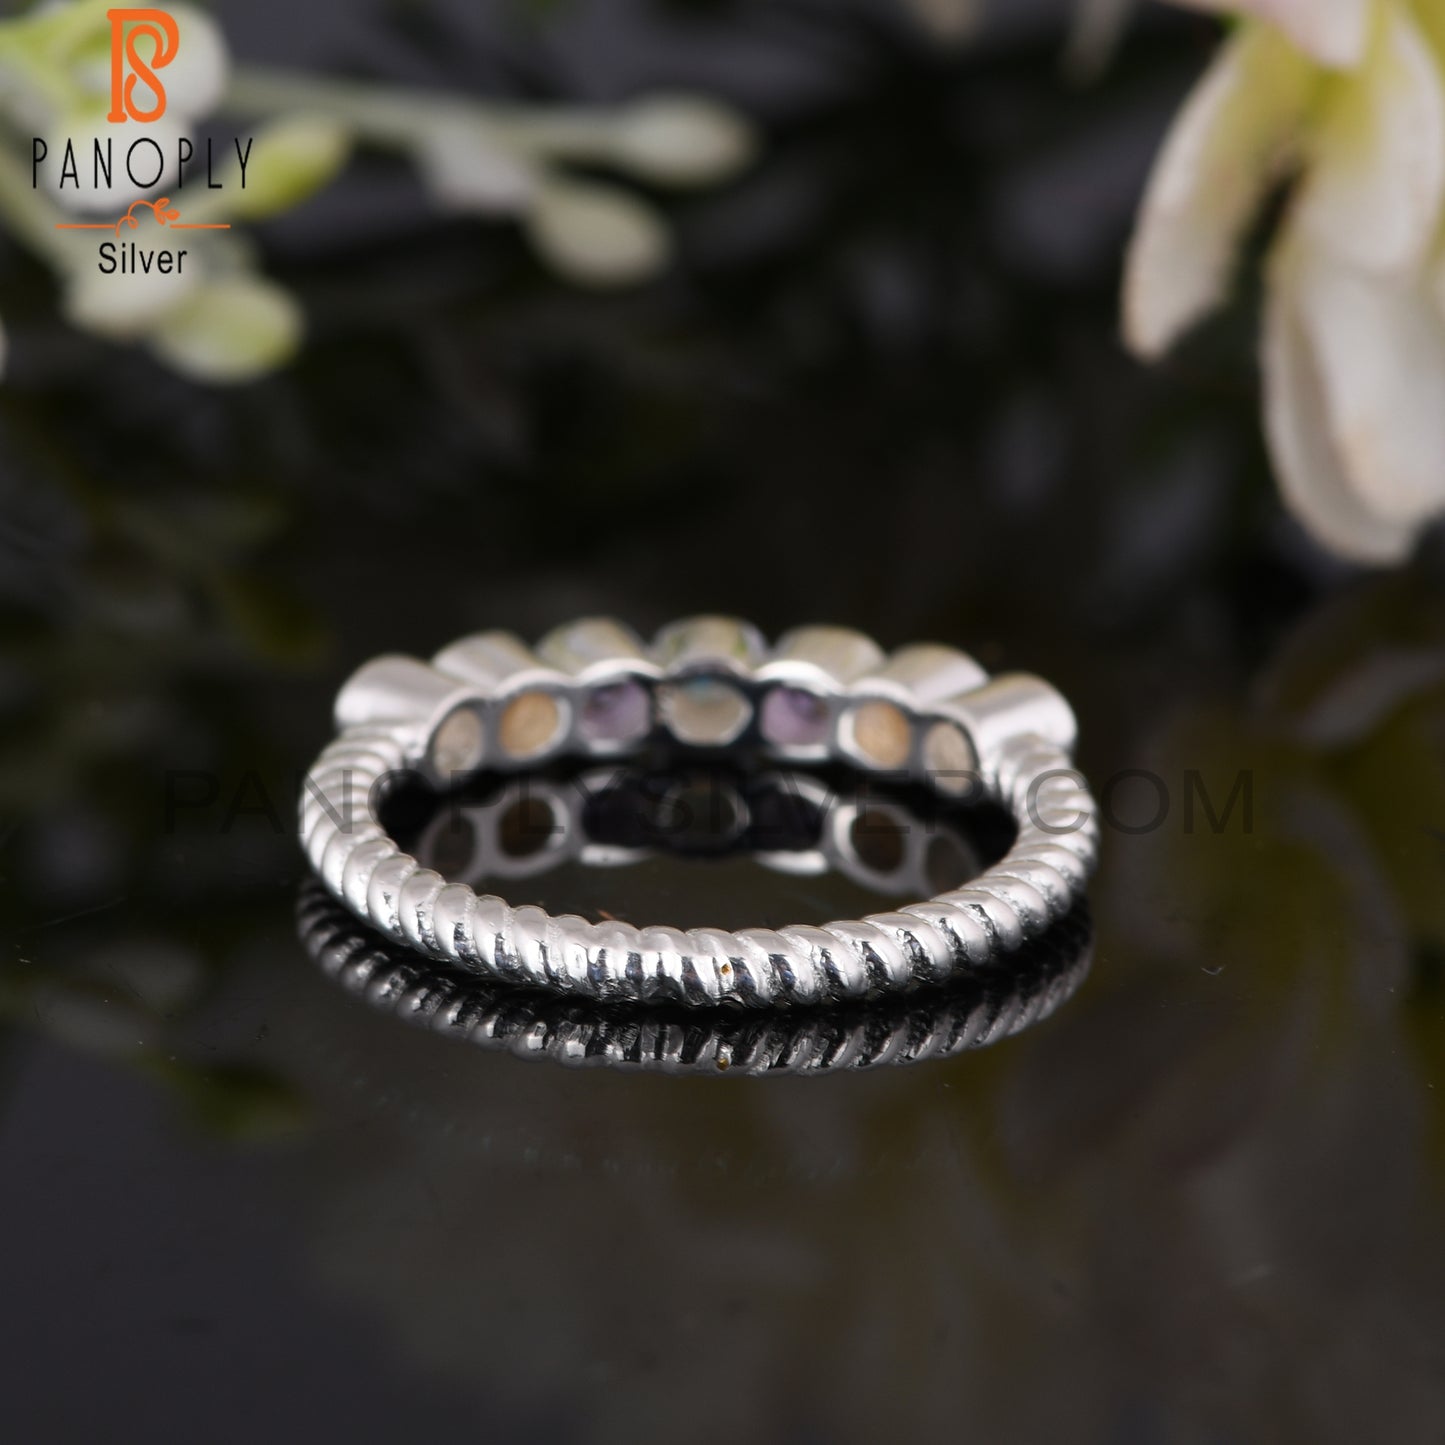 925 Sterling Silver Amethyst, Citrine & Ethiopian Opal Ring